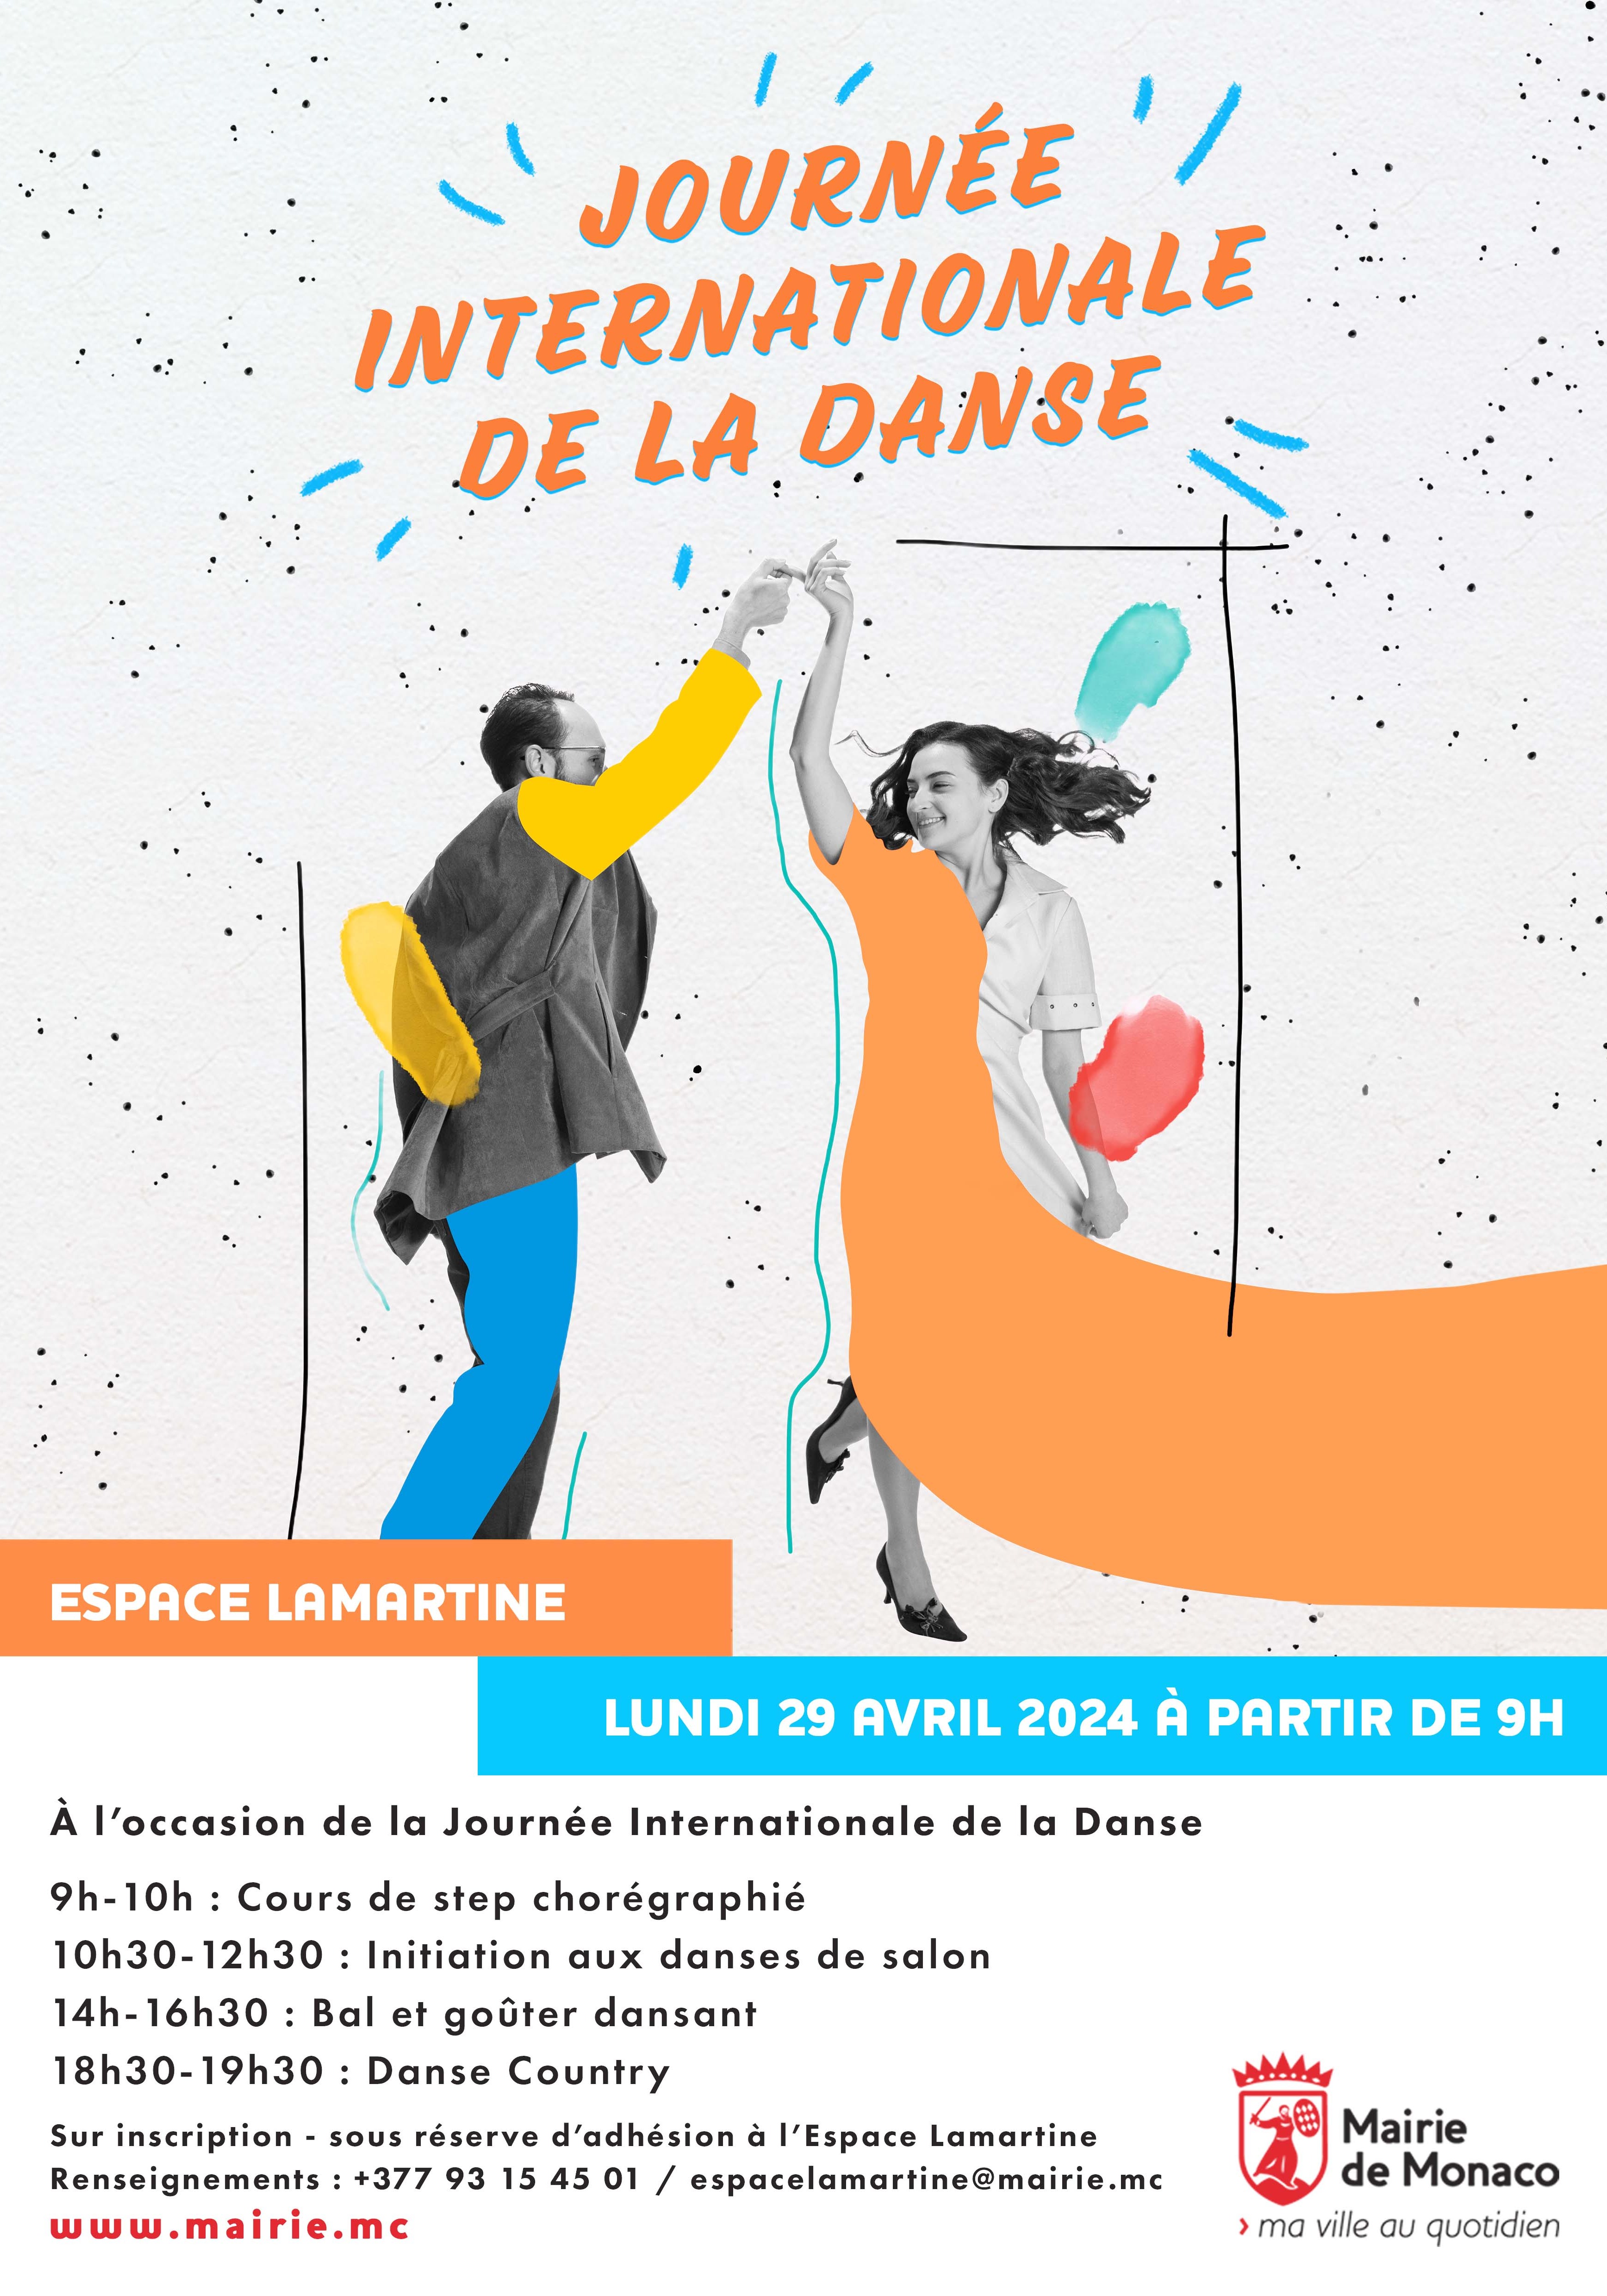 Journée internationale de la danse